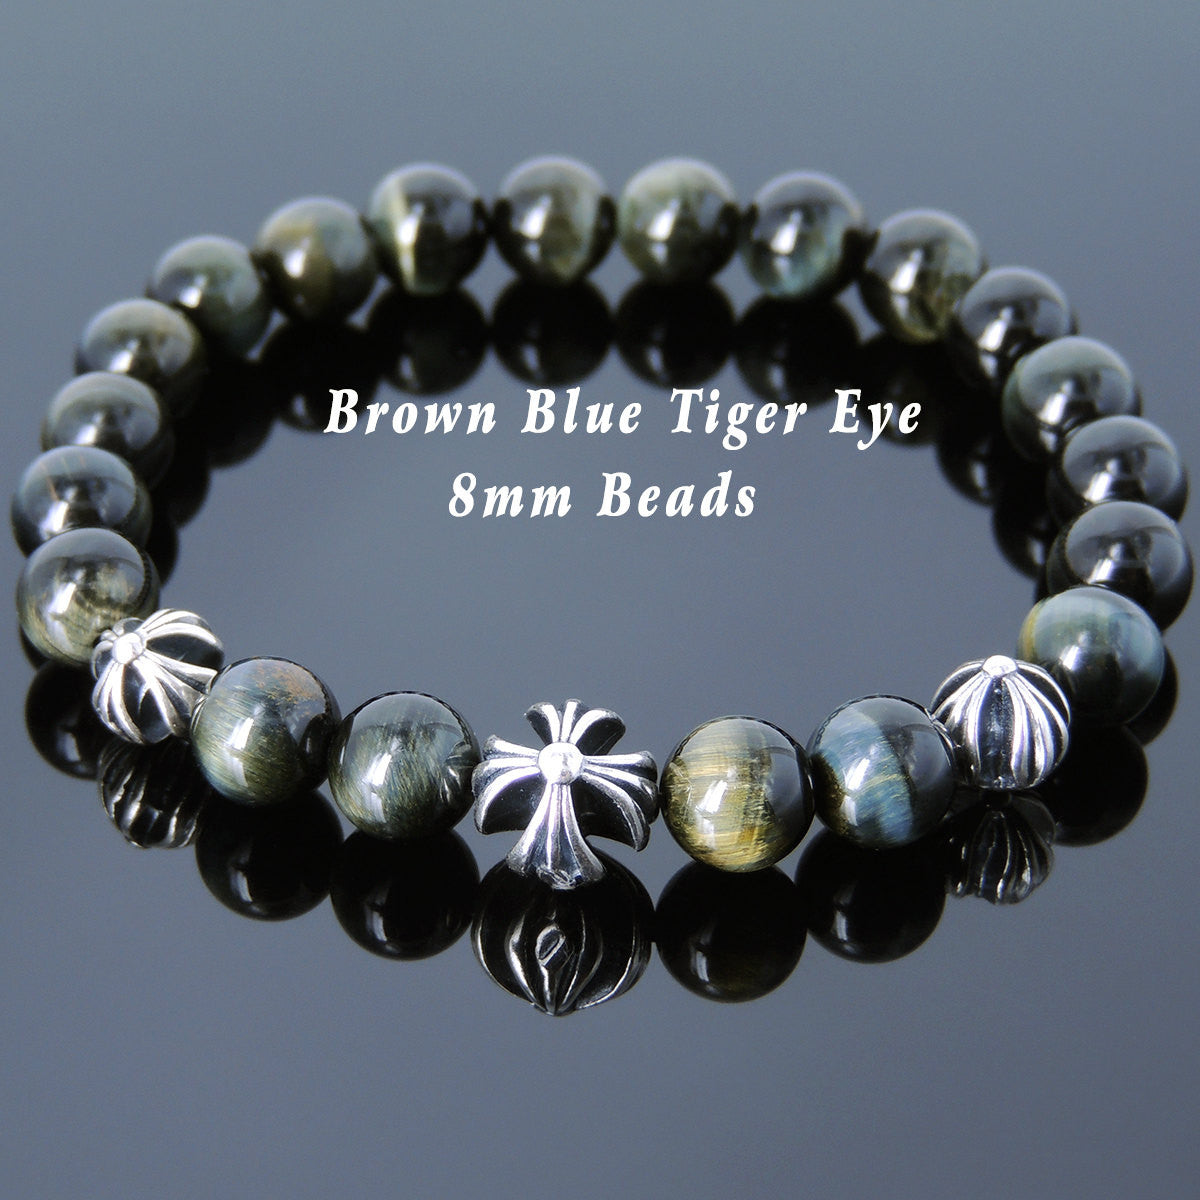 8mm Brown Blue Tiger Eye Healing Gemstone Bracelet with S925 Sterling Silver Holy Trinity Cross Beads - Handmade by Gem & Silver BR741